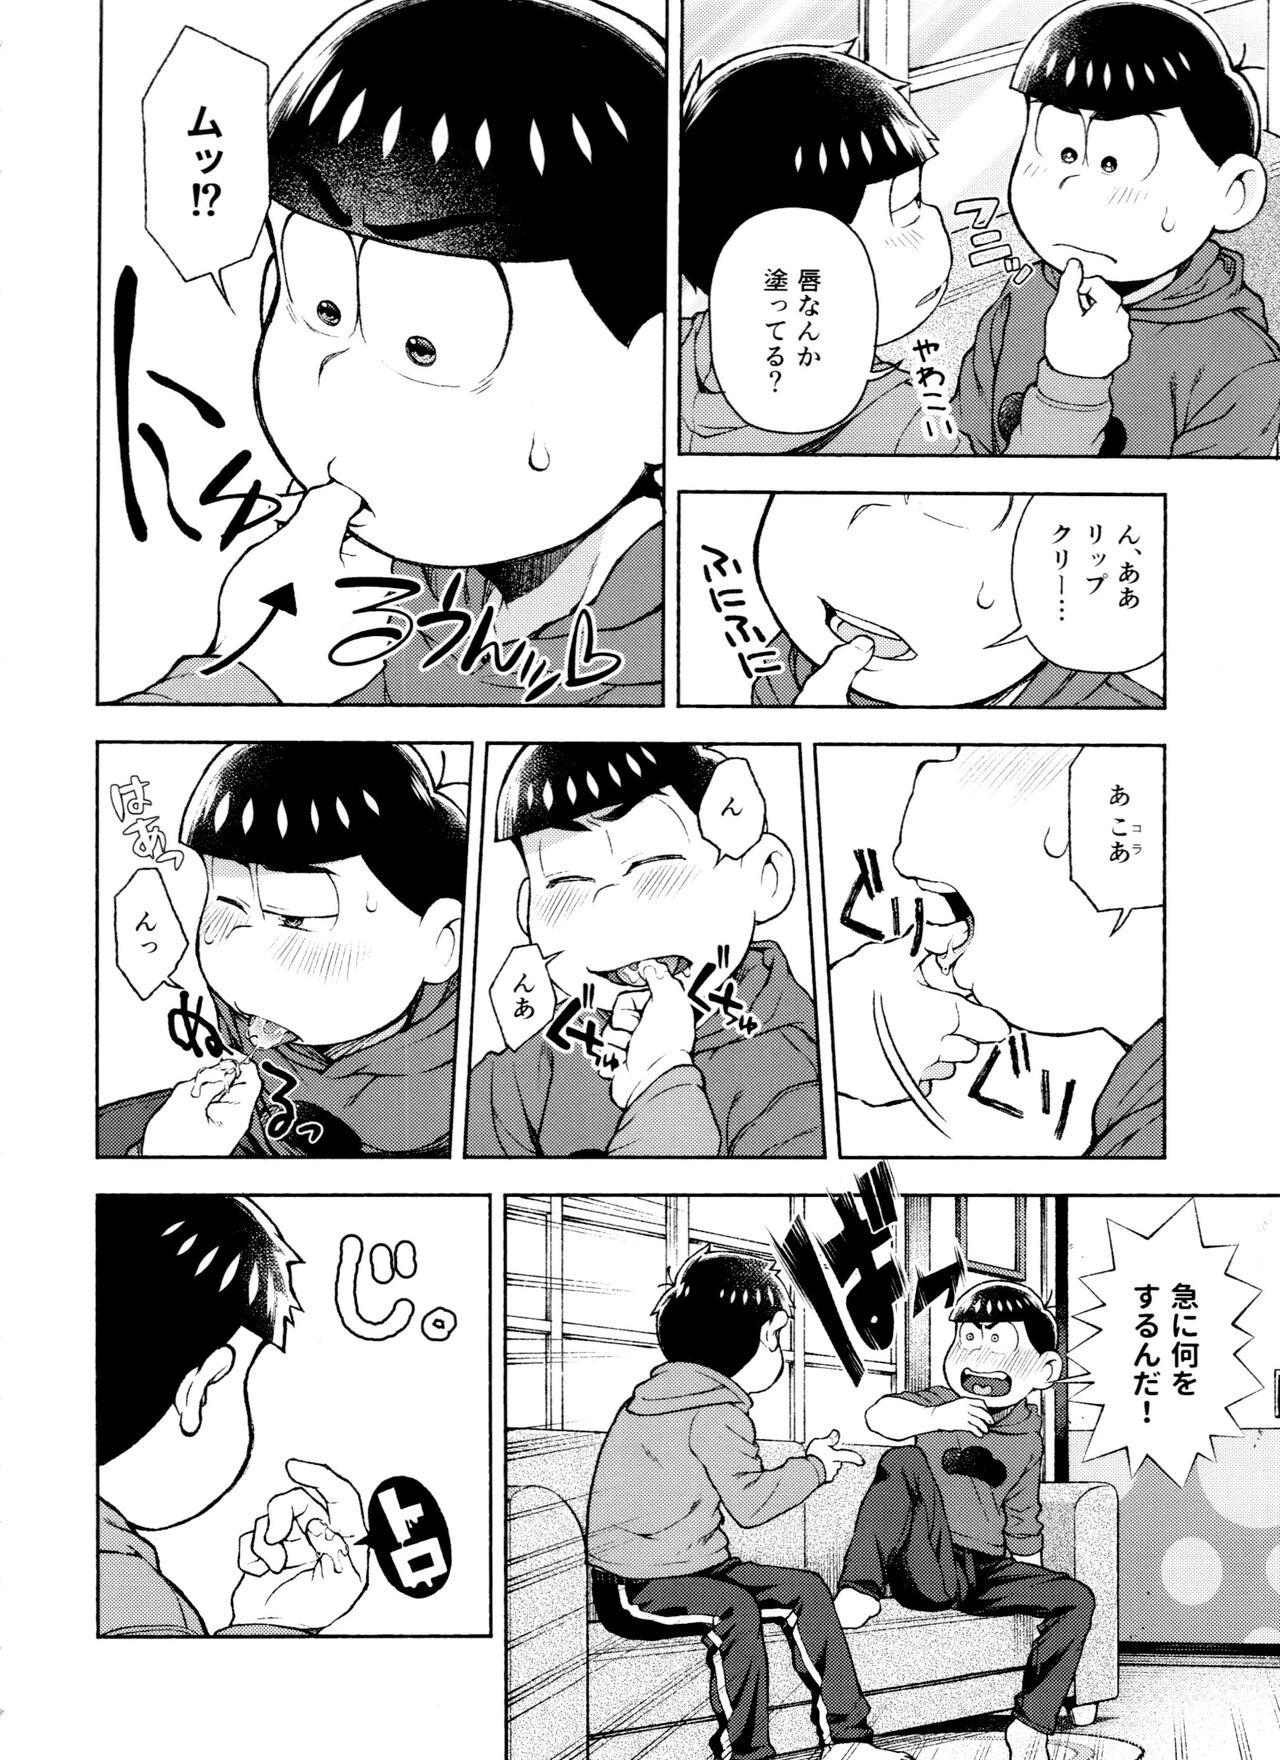 Perverted Seventh Heaven - Osomatsu san Ex Girlfriends - Page 11